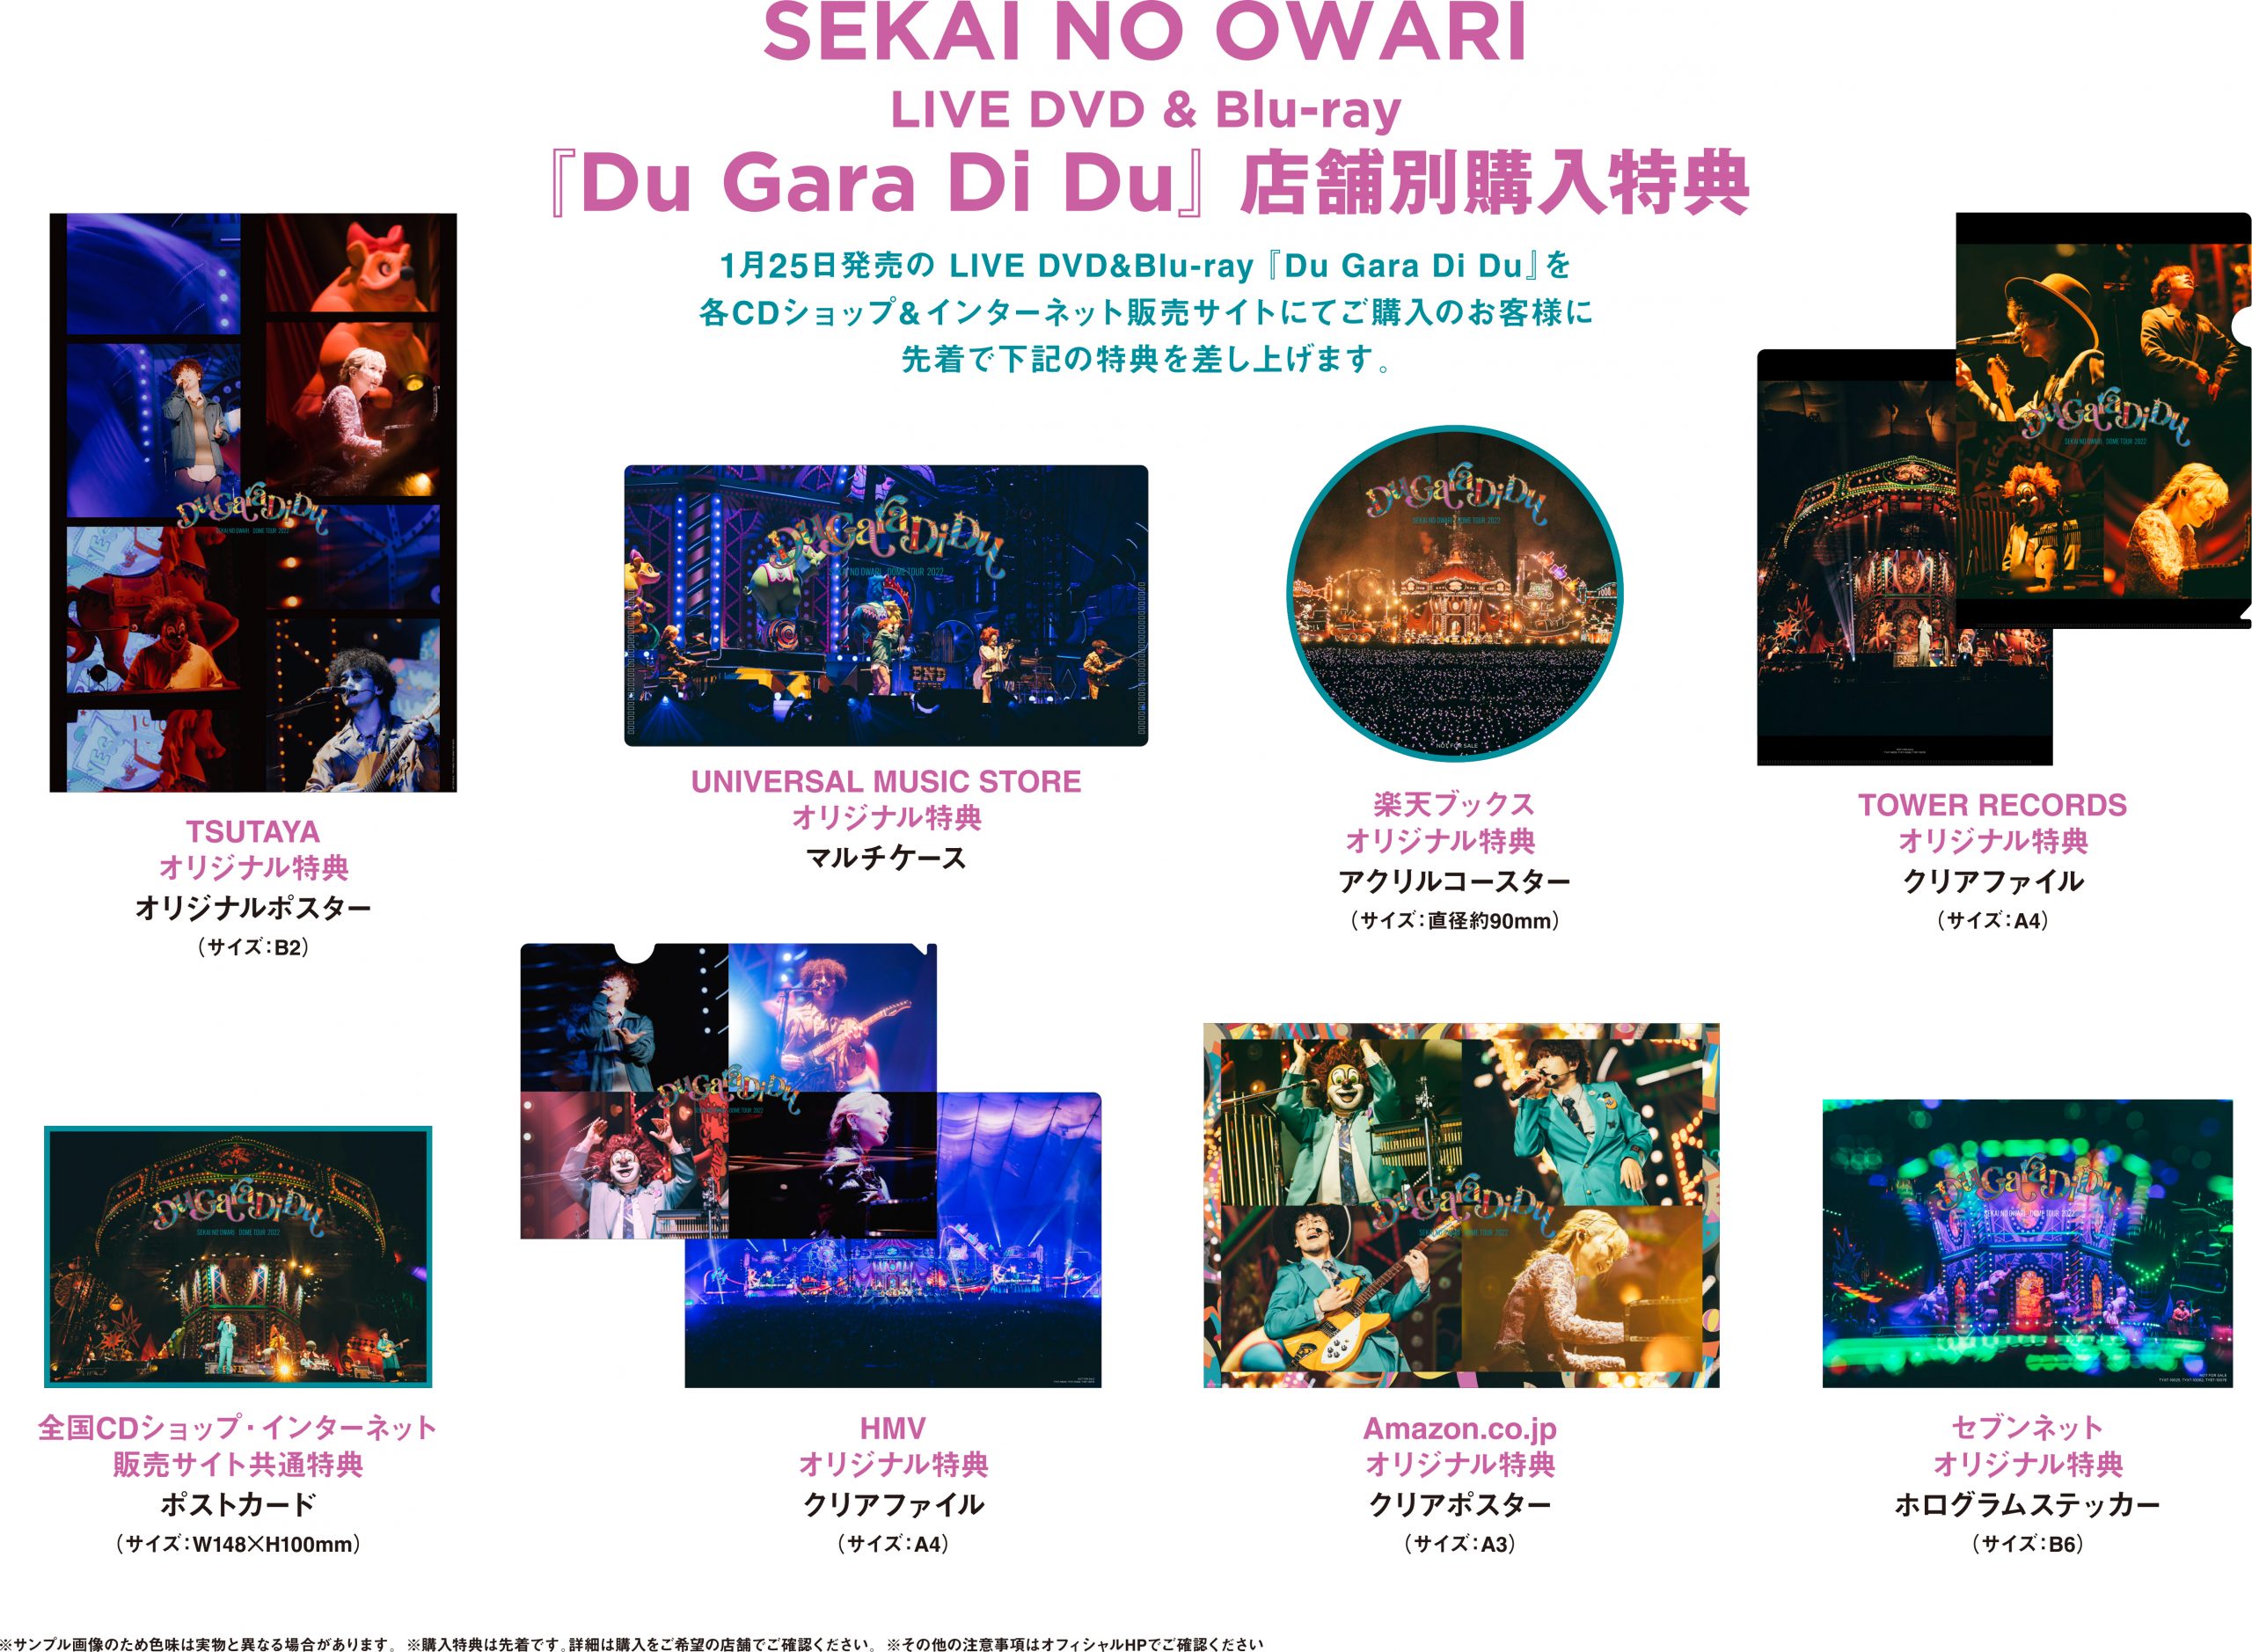 SEKAI NO OWARI LIVEDVDセット - ミュージック